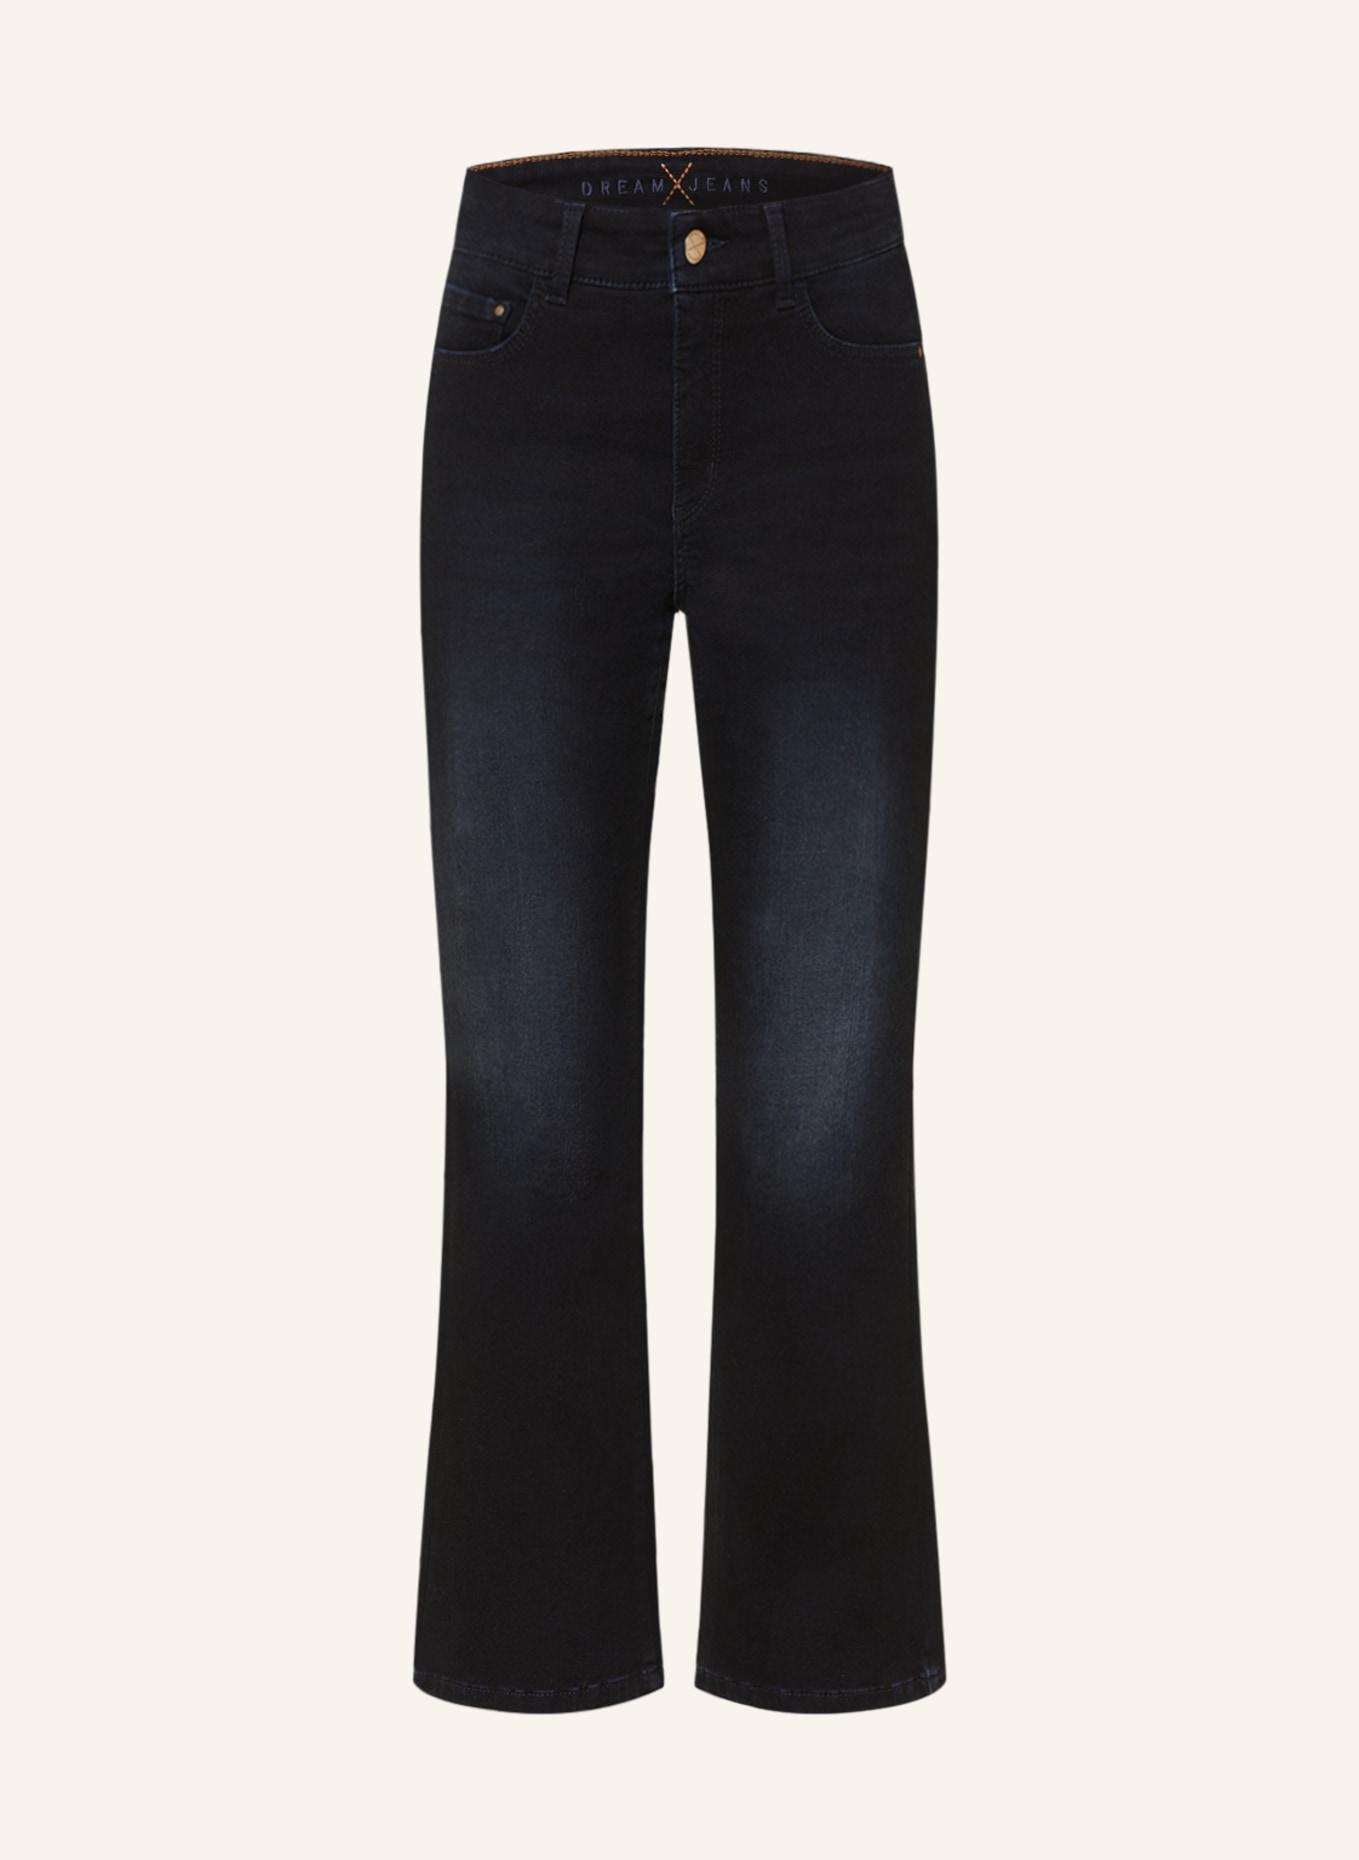 MAC Flared Jeans DREAM KICK, Farbe: D896 blue overdyed black (Bild 1)